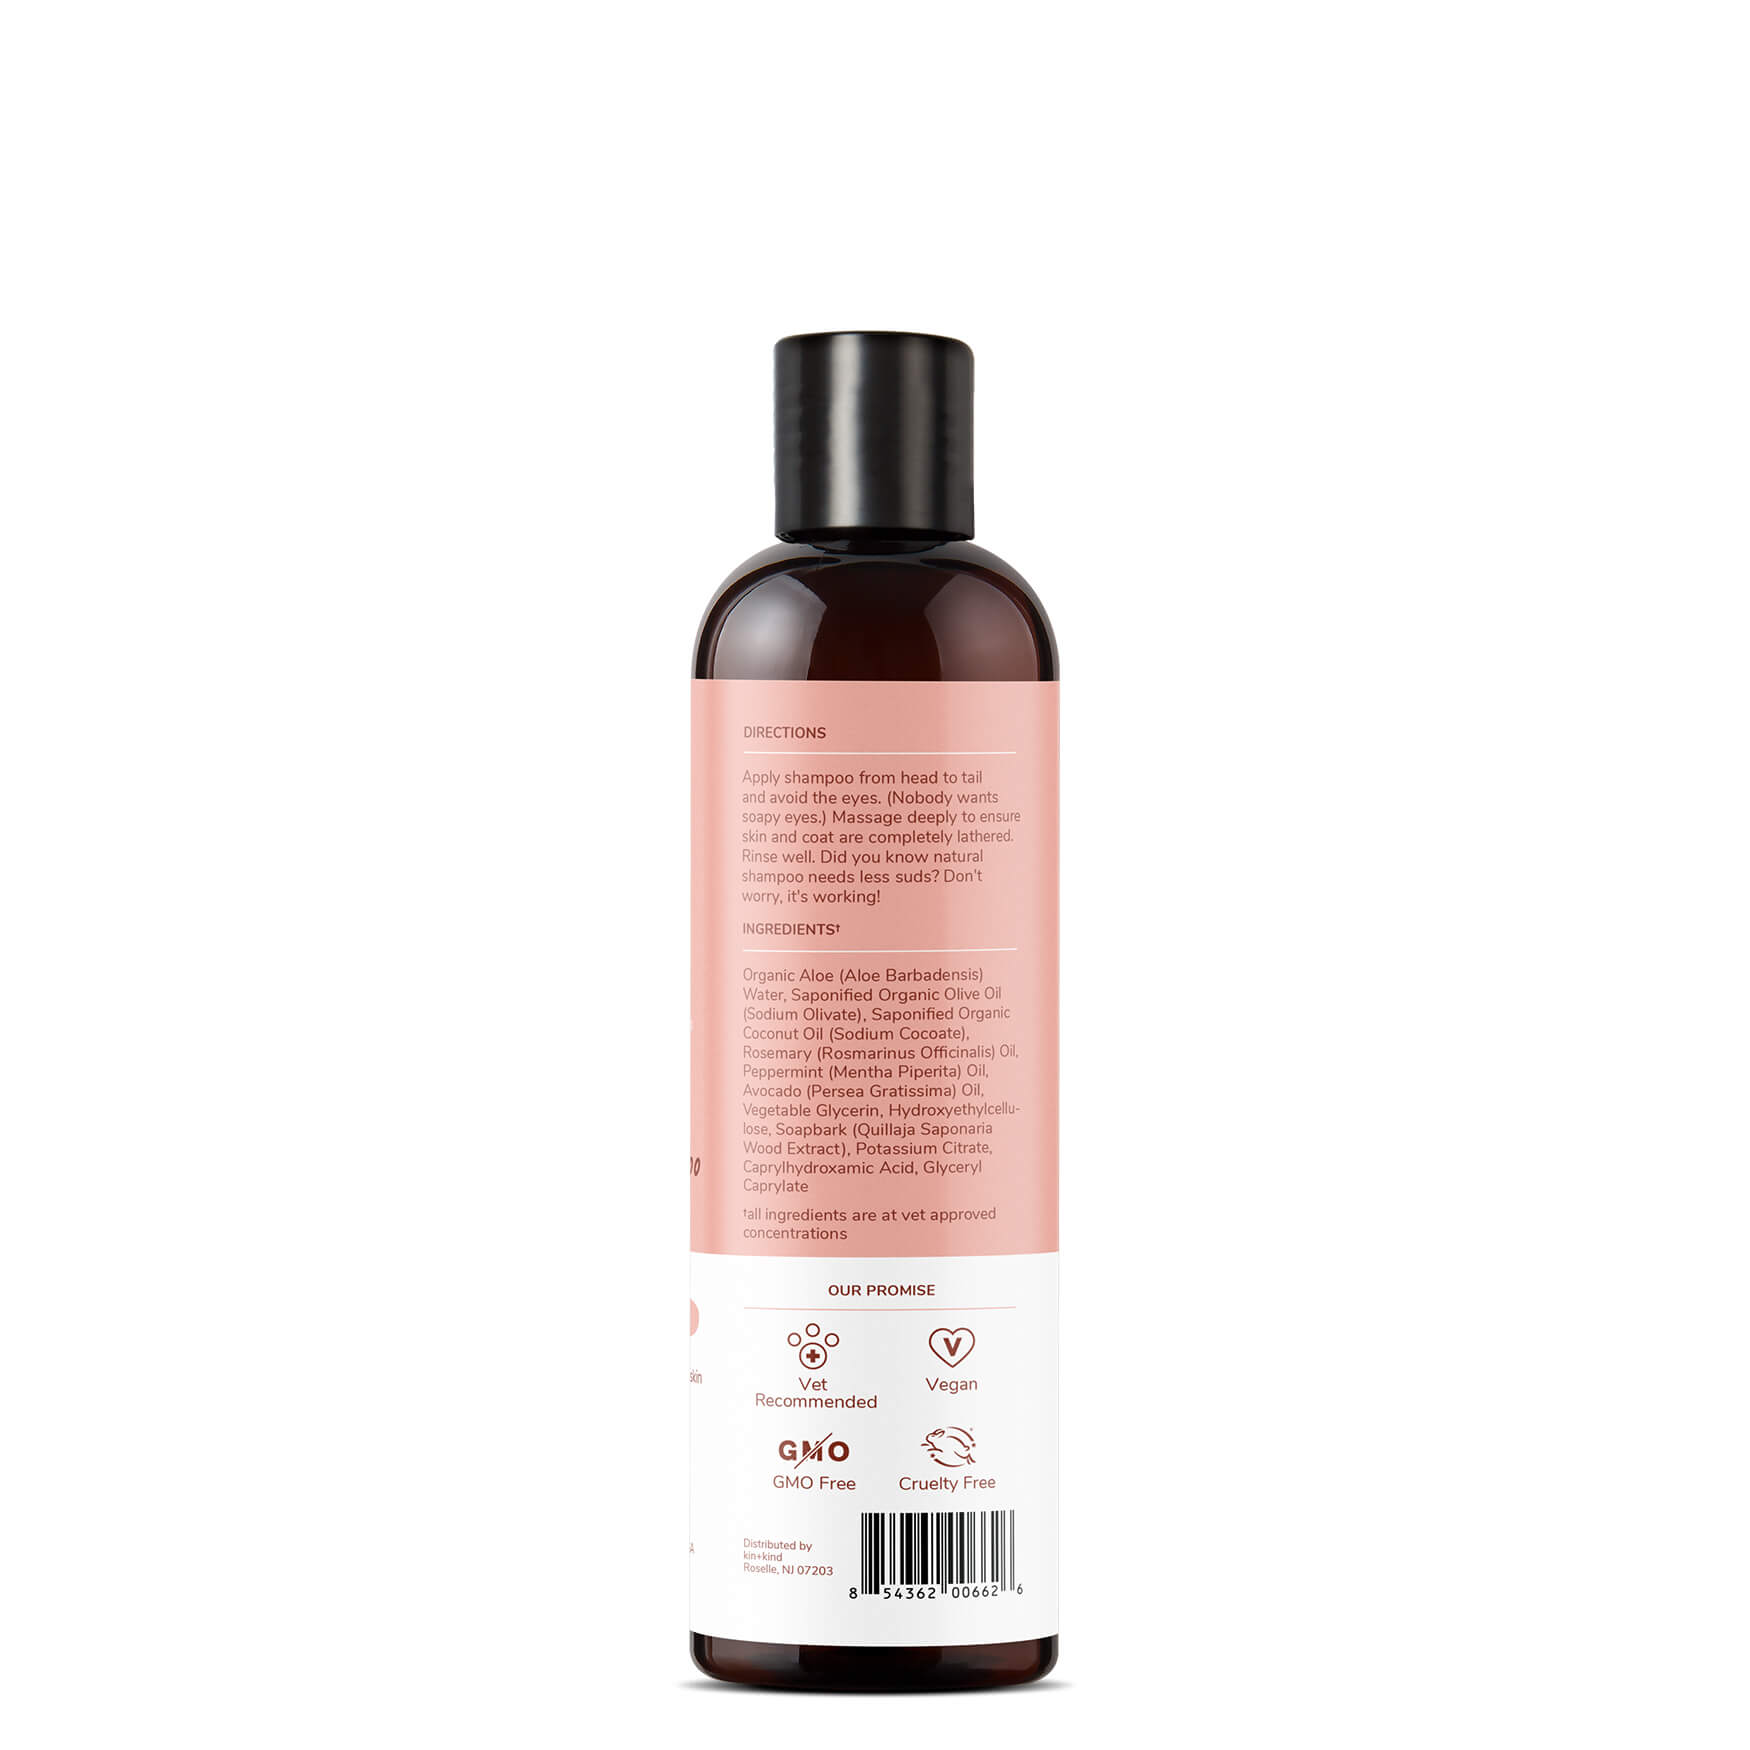 Kin + Kind Itch Shampoo Bottle information